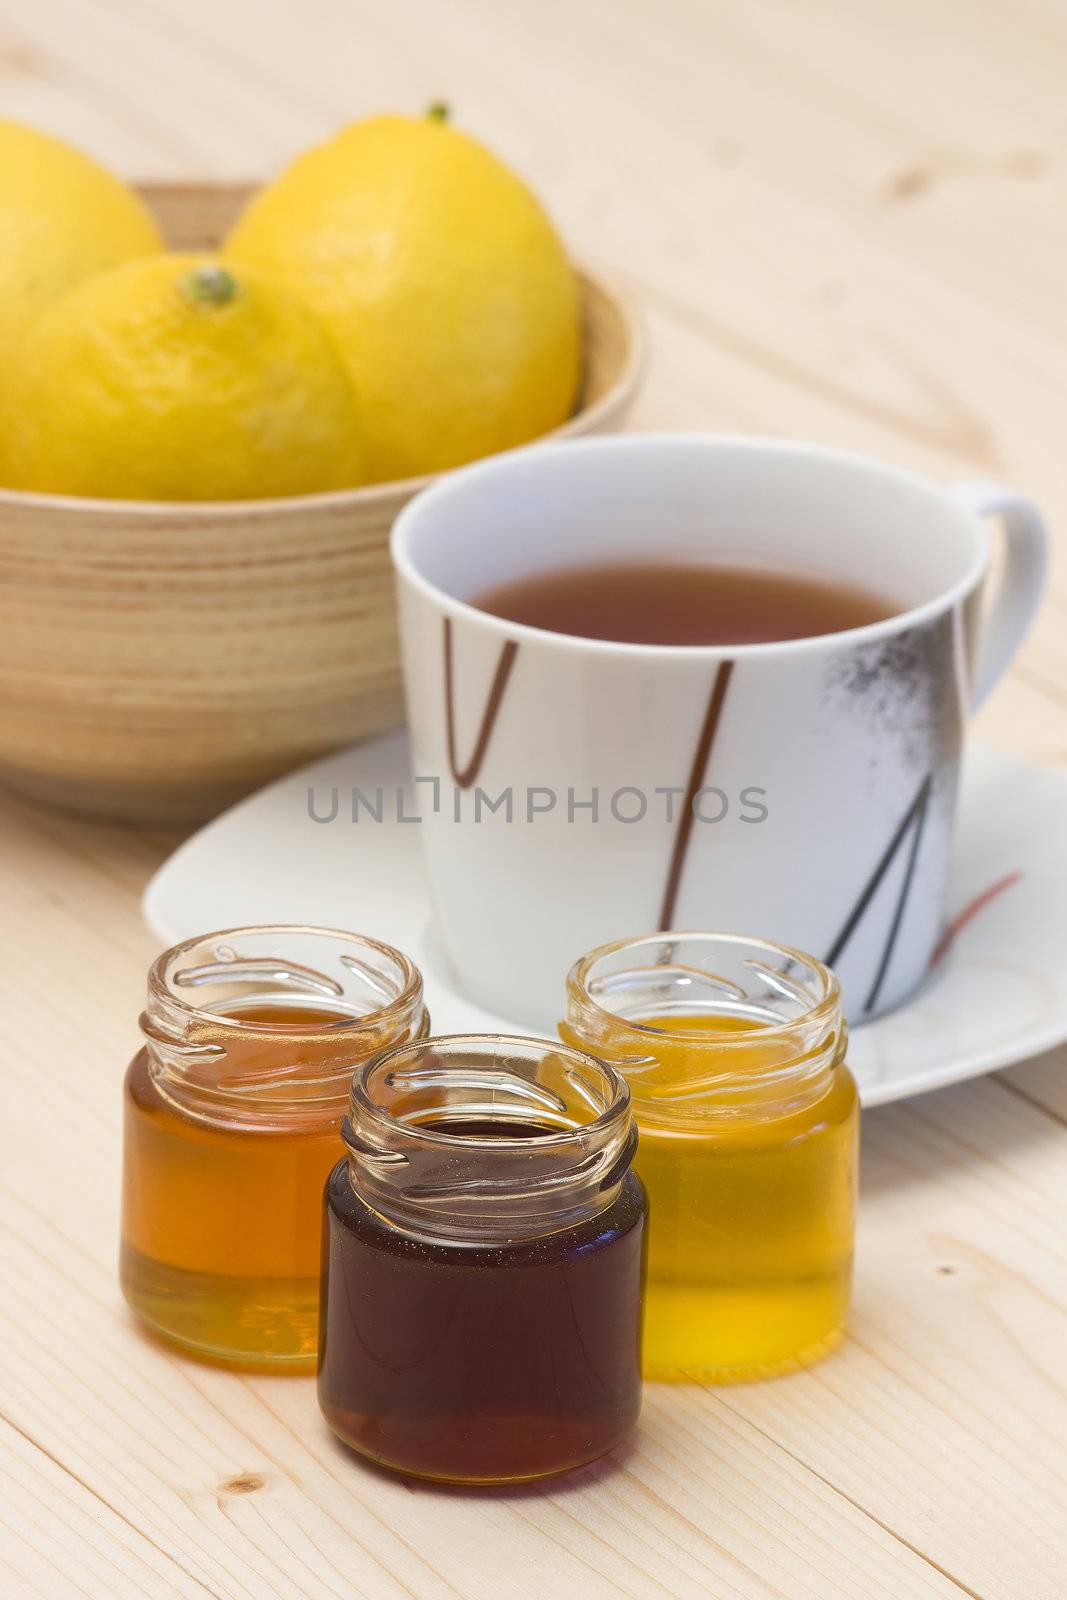 cup of tea, honey and fresh lemons